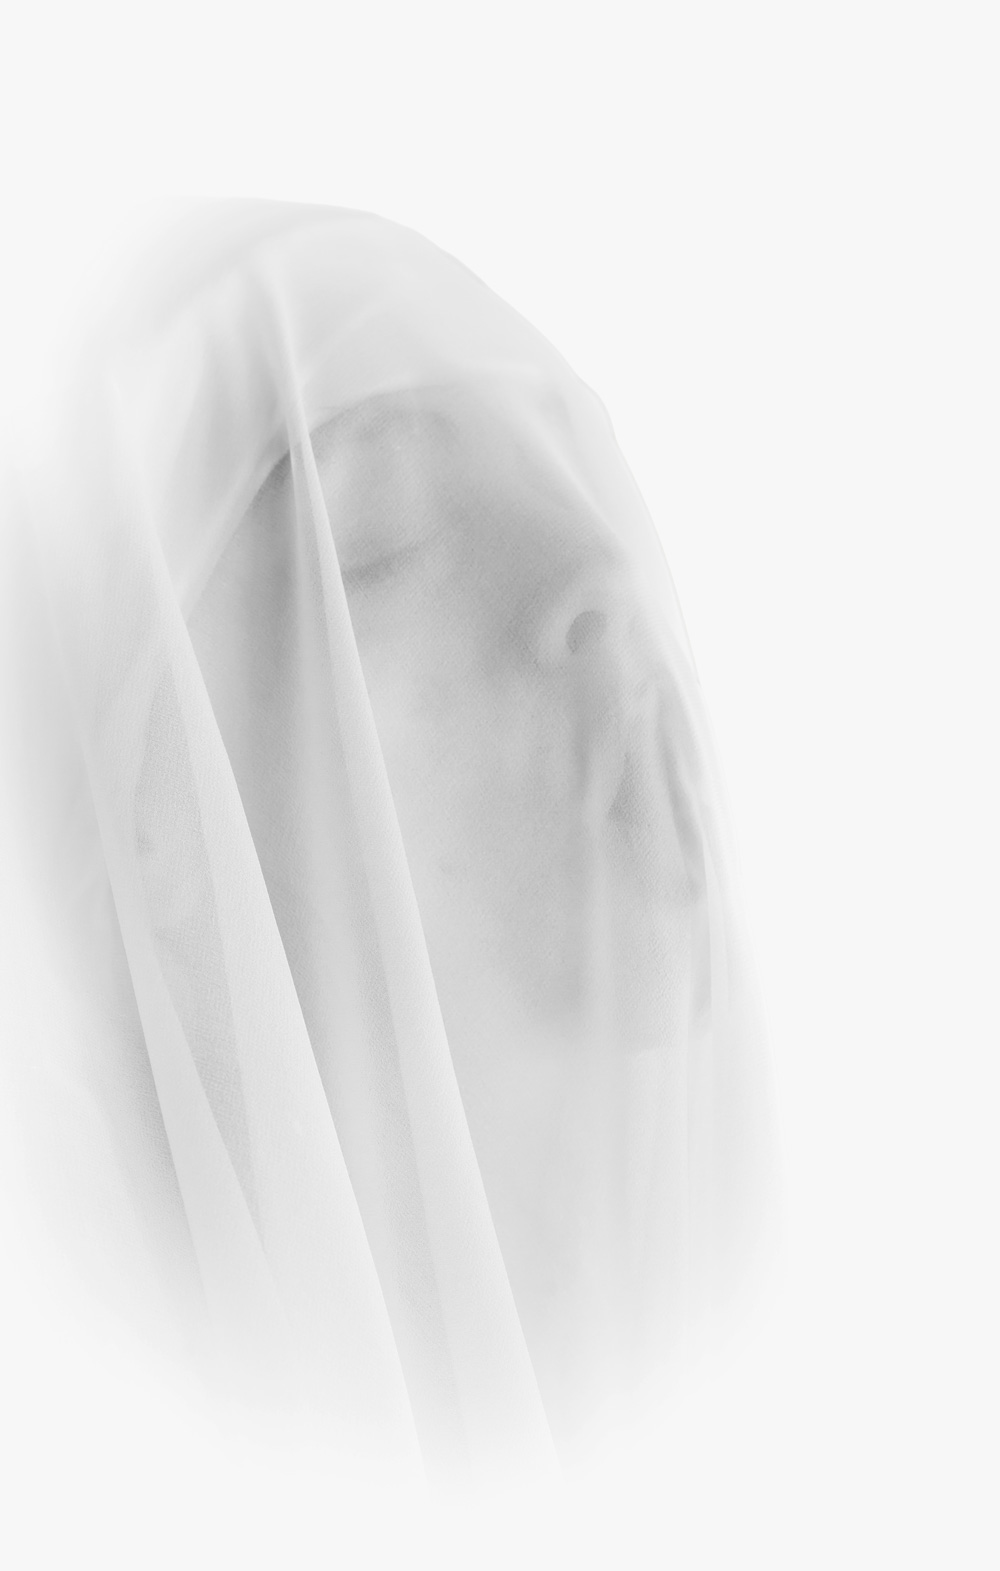 ©robertospotti-woman-with-veil